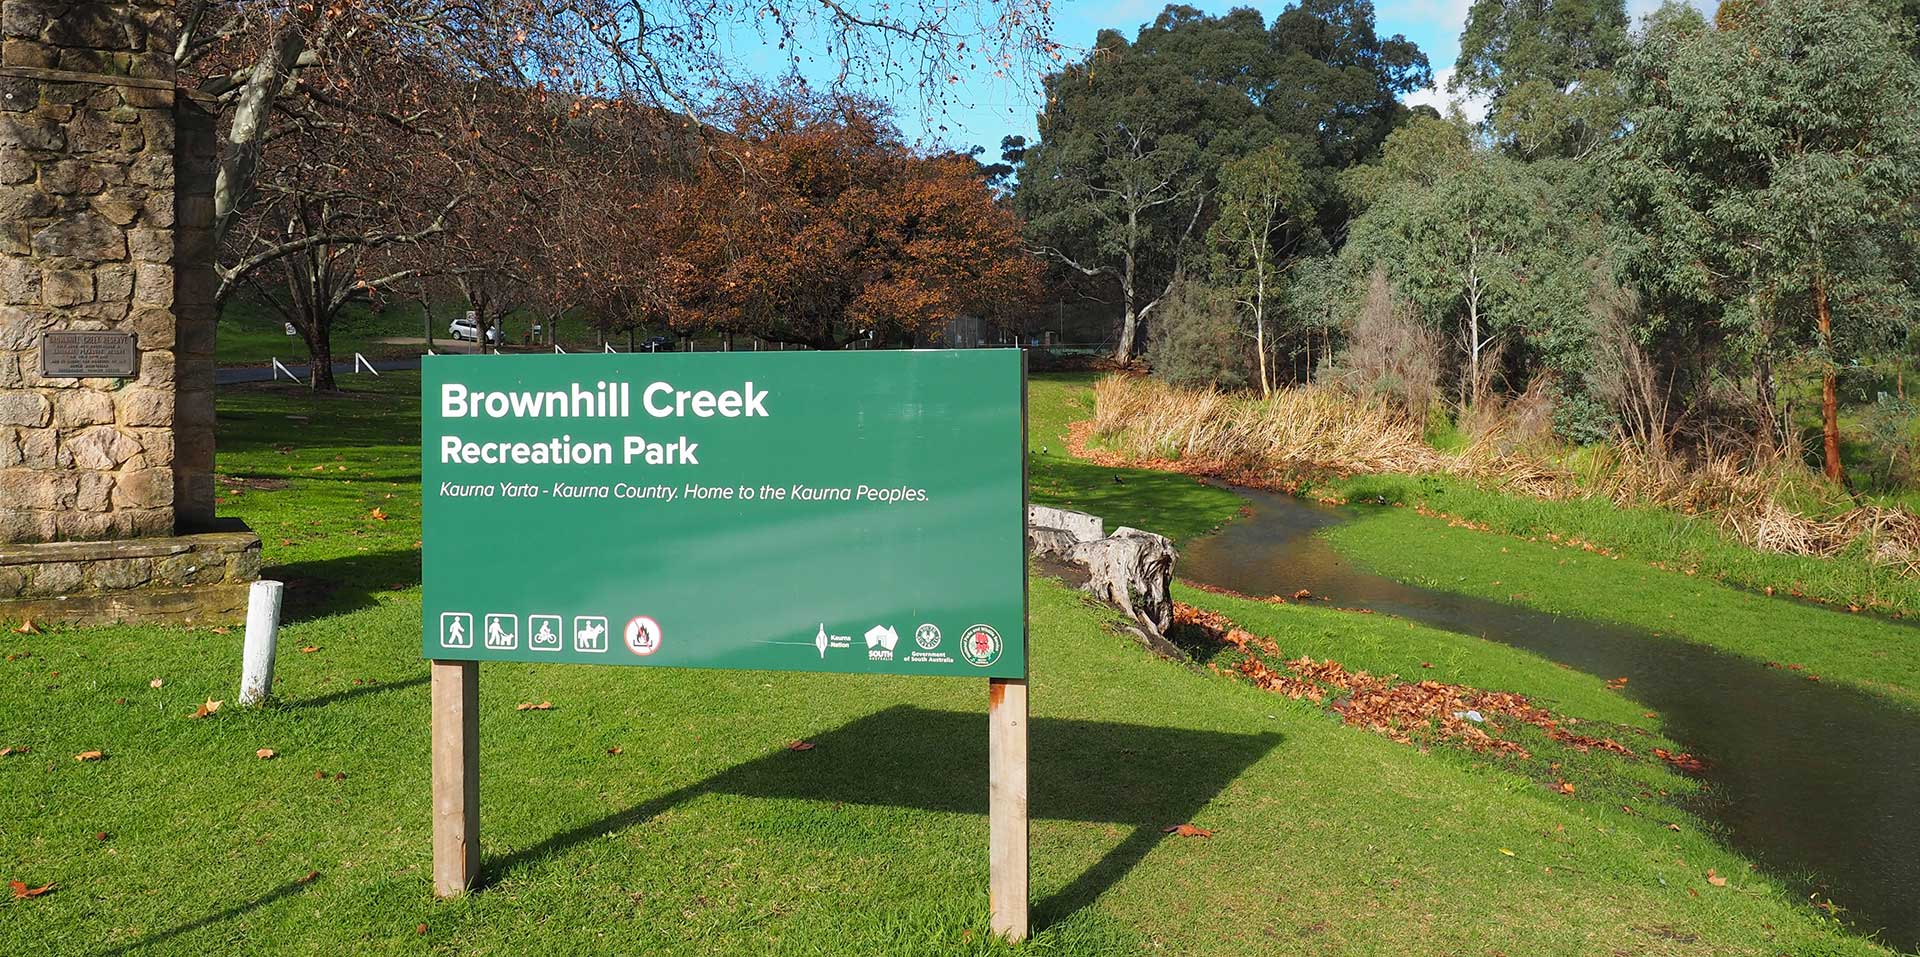 Brownhill Creek Recreation Park